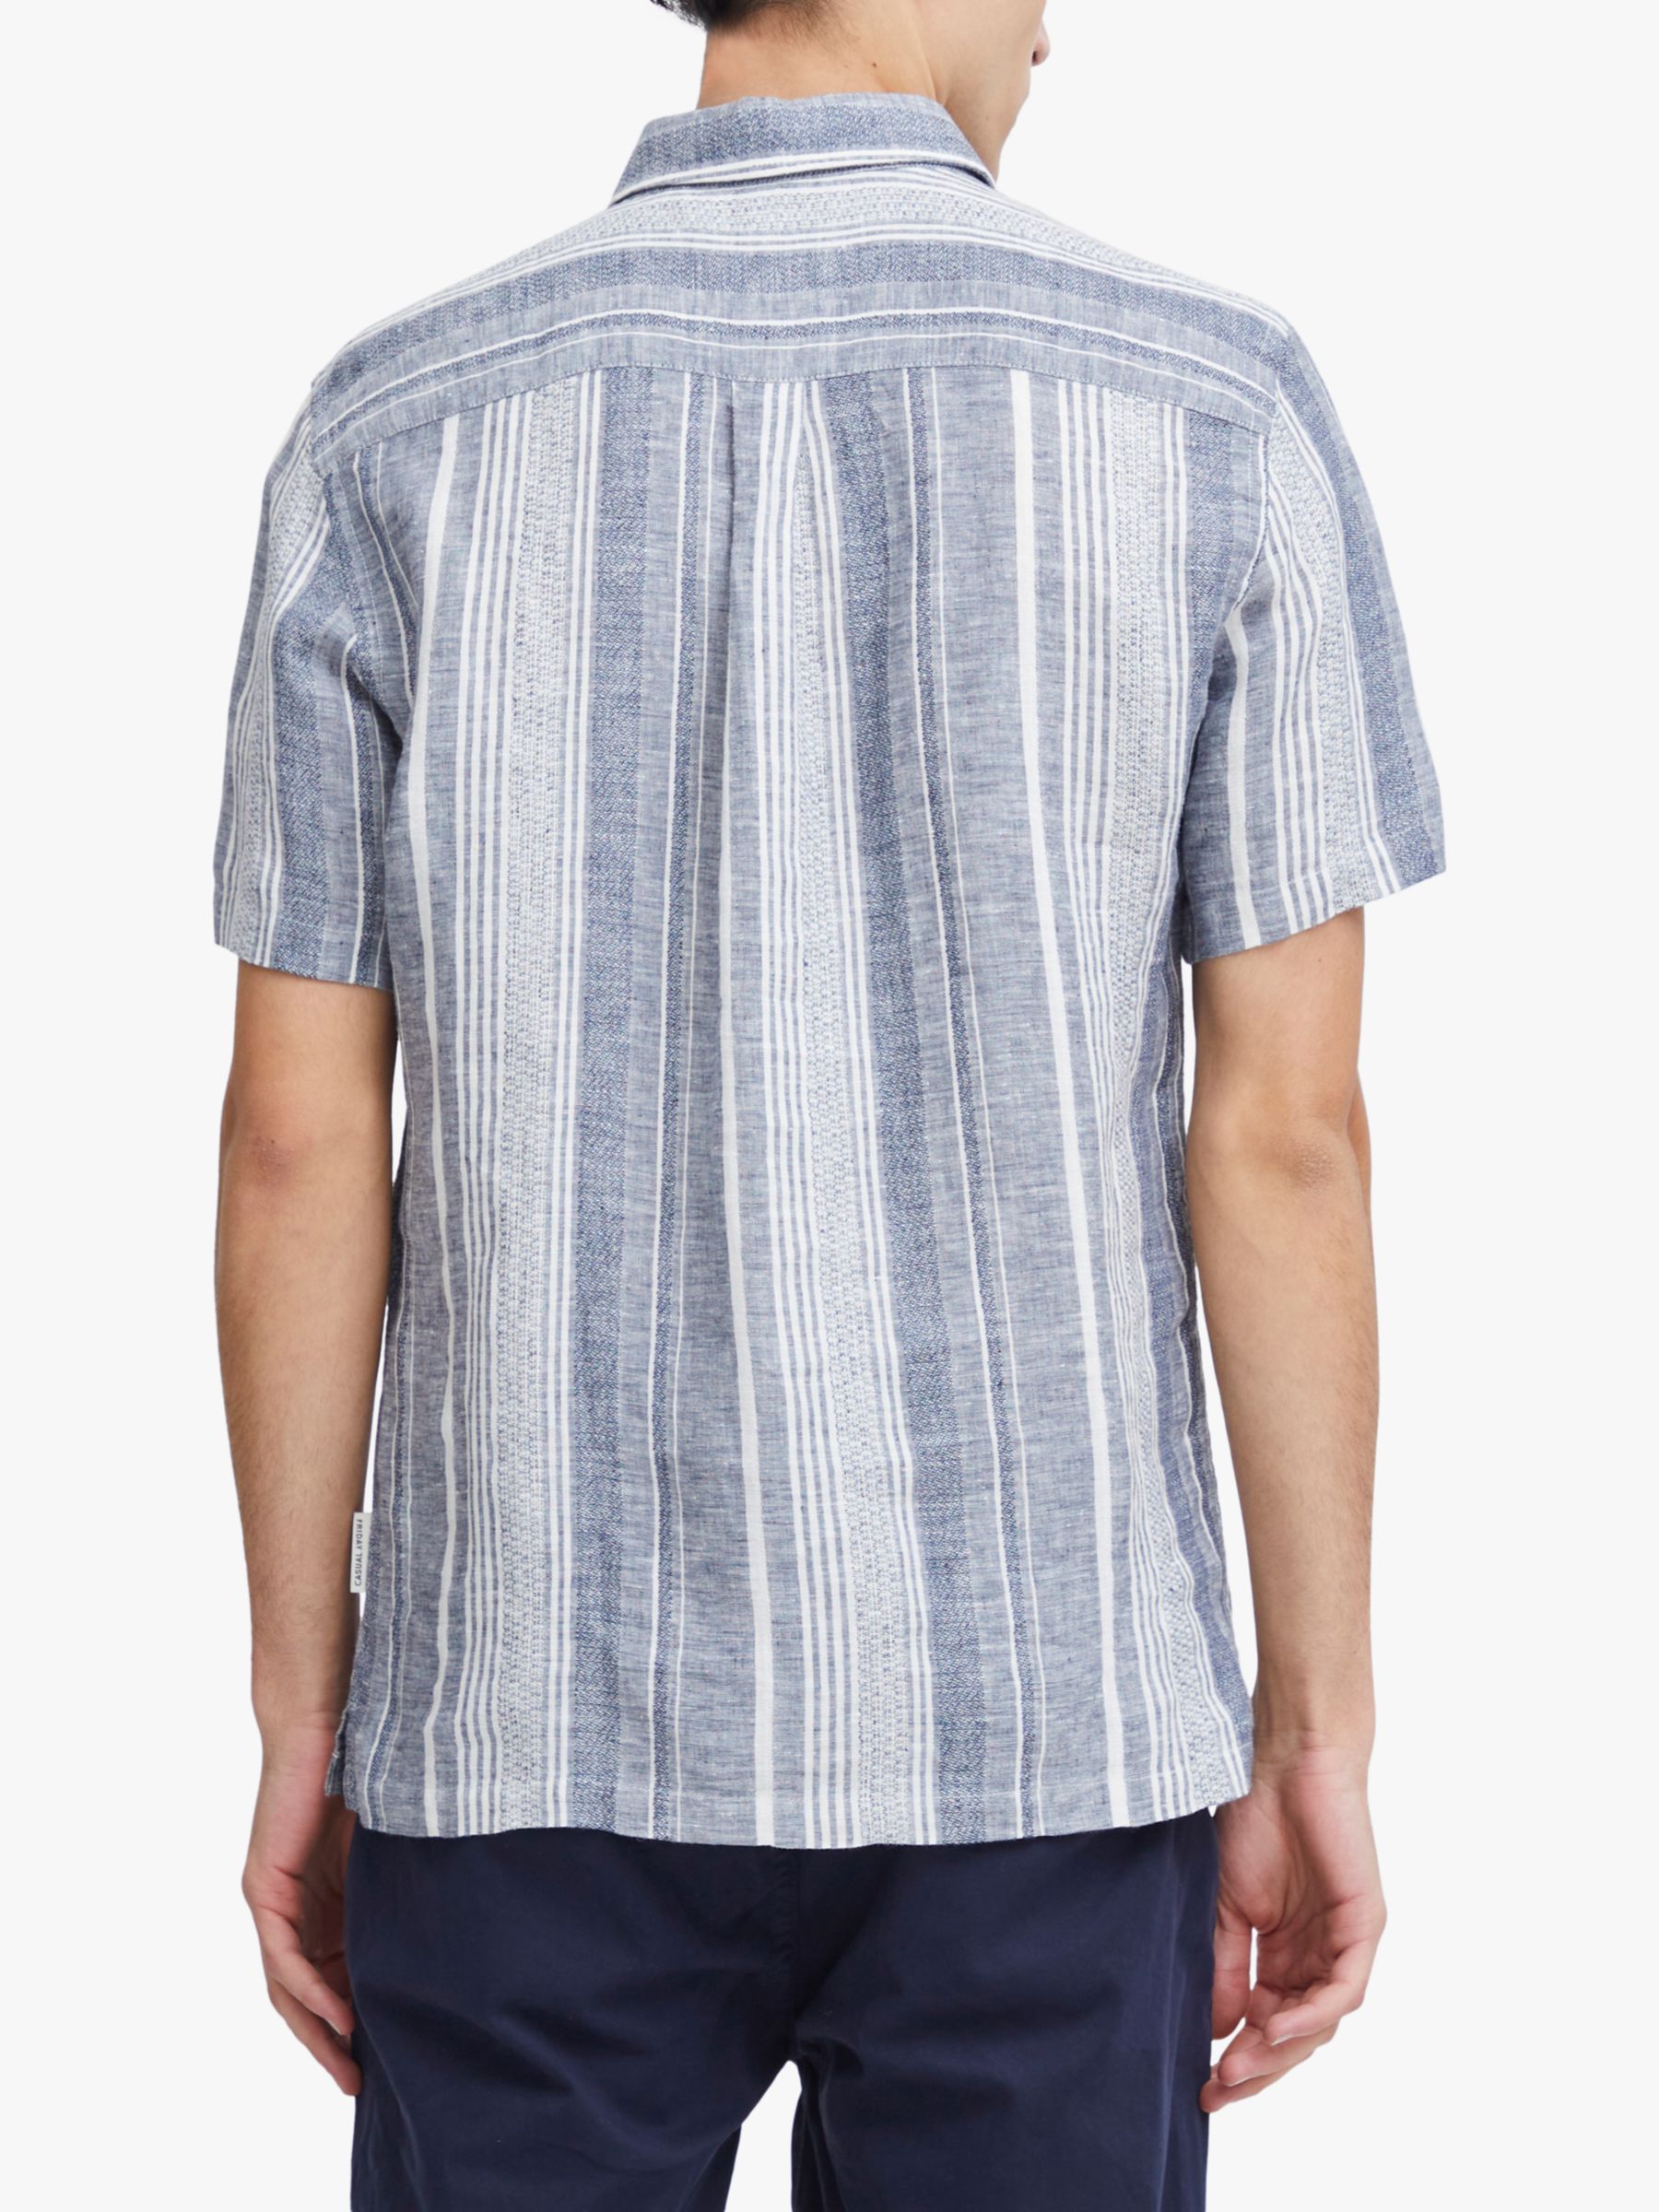 Casual Friday Anton Short Sleeve Stripe Linen Shirt, Navy/White, S